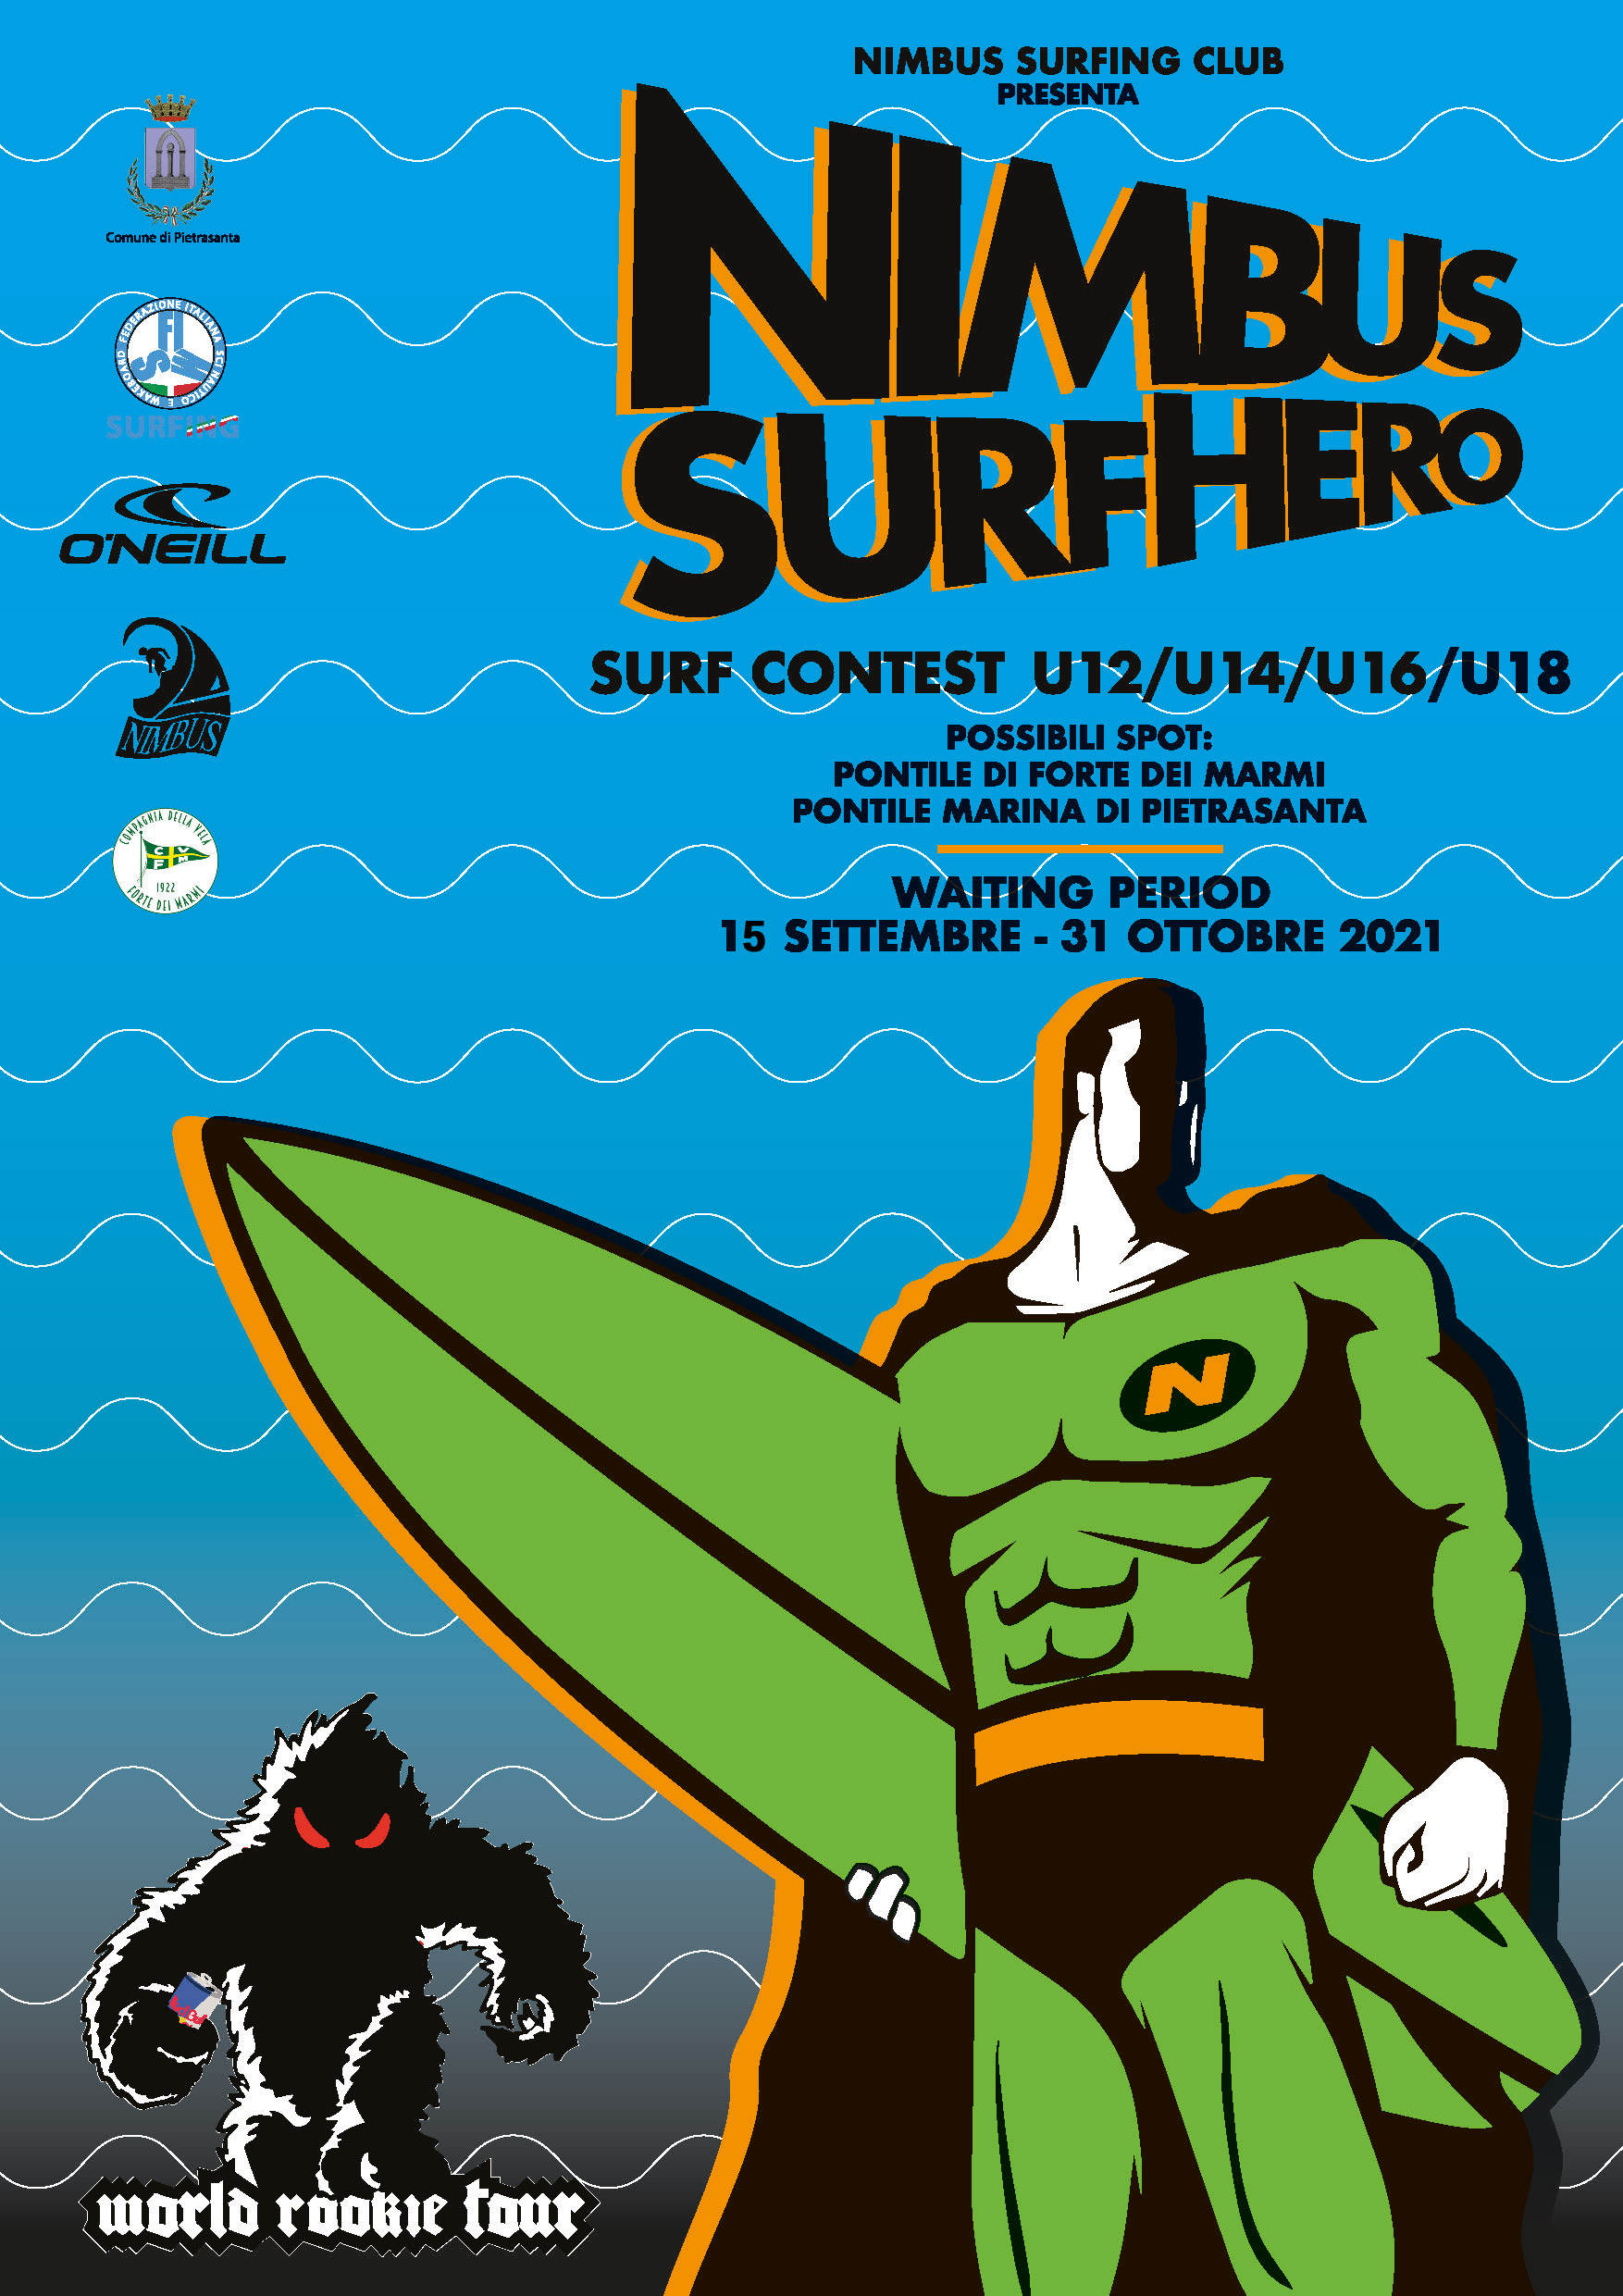 locandina-Nimbus-Surf-Hero-2021-marina-di-pietrasanta-forte-dei-marmi